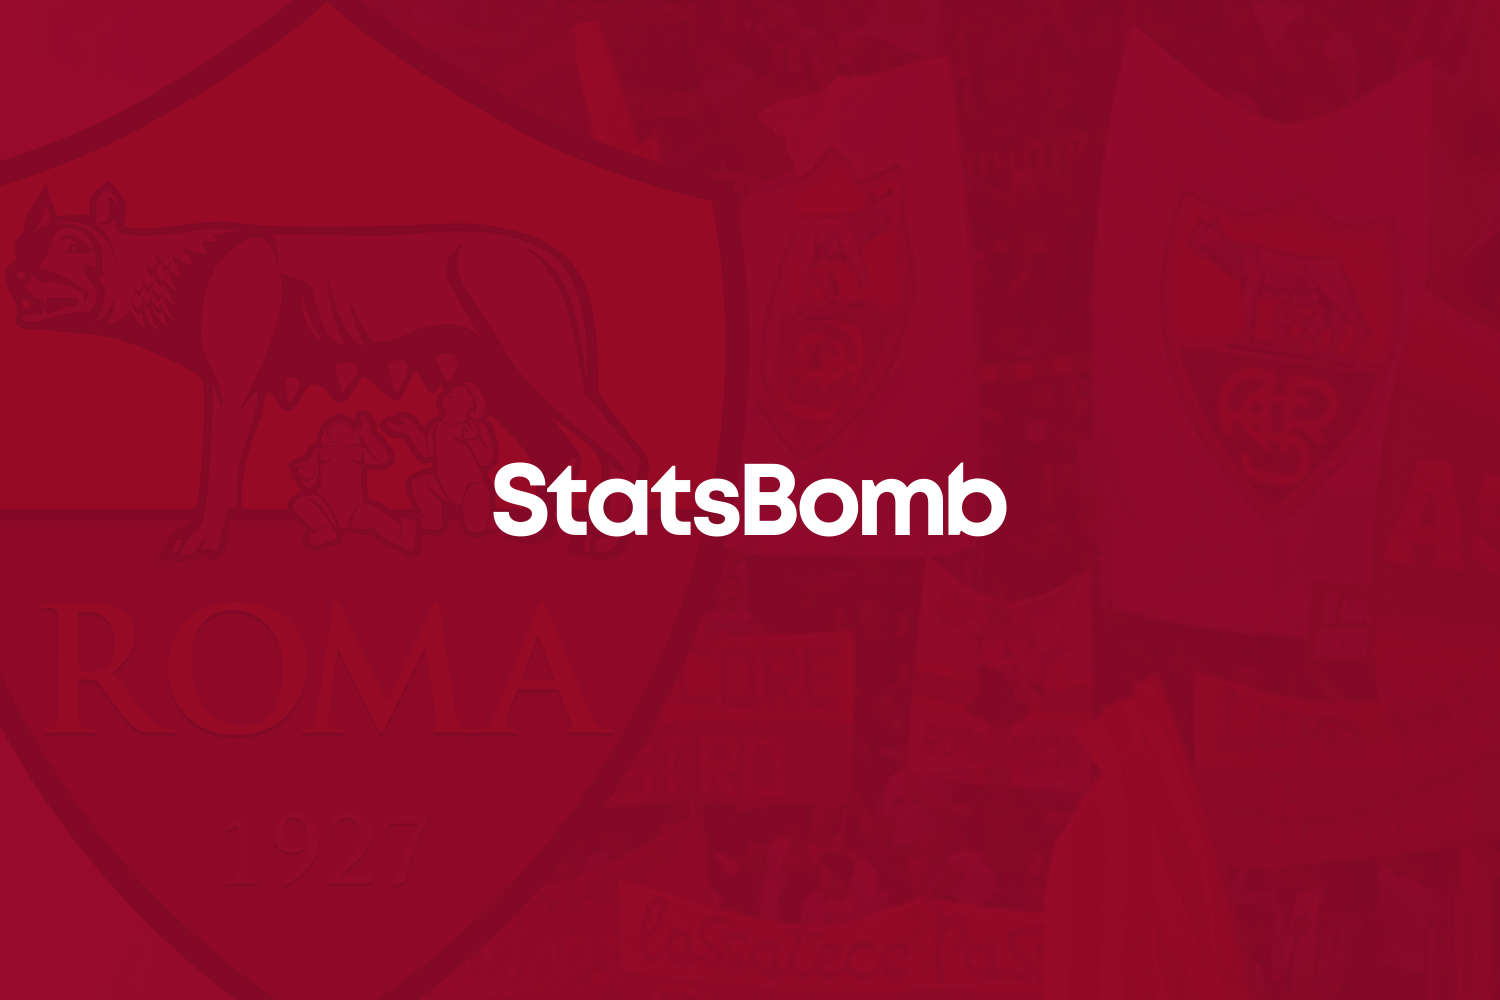 StatsBomb Agree Partnership With AS Roma